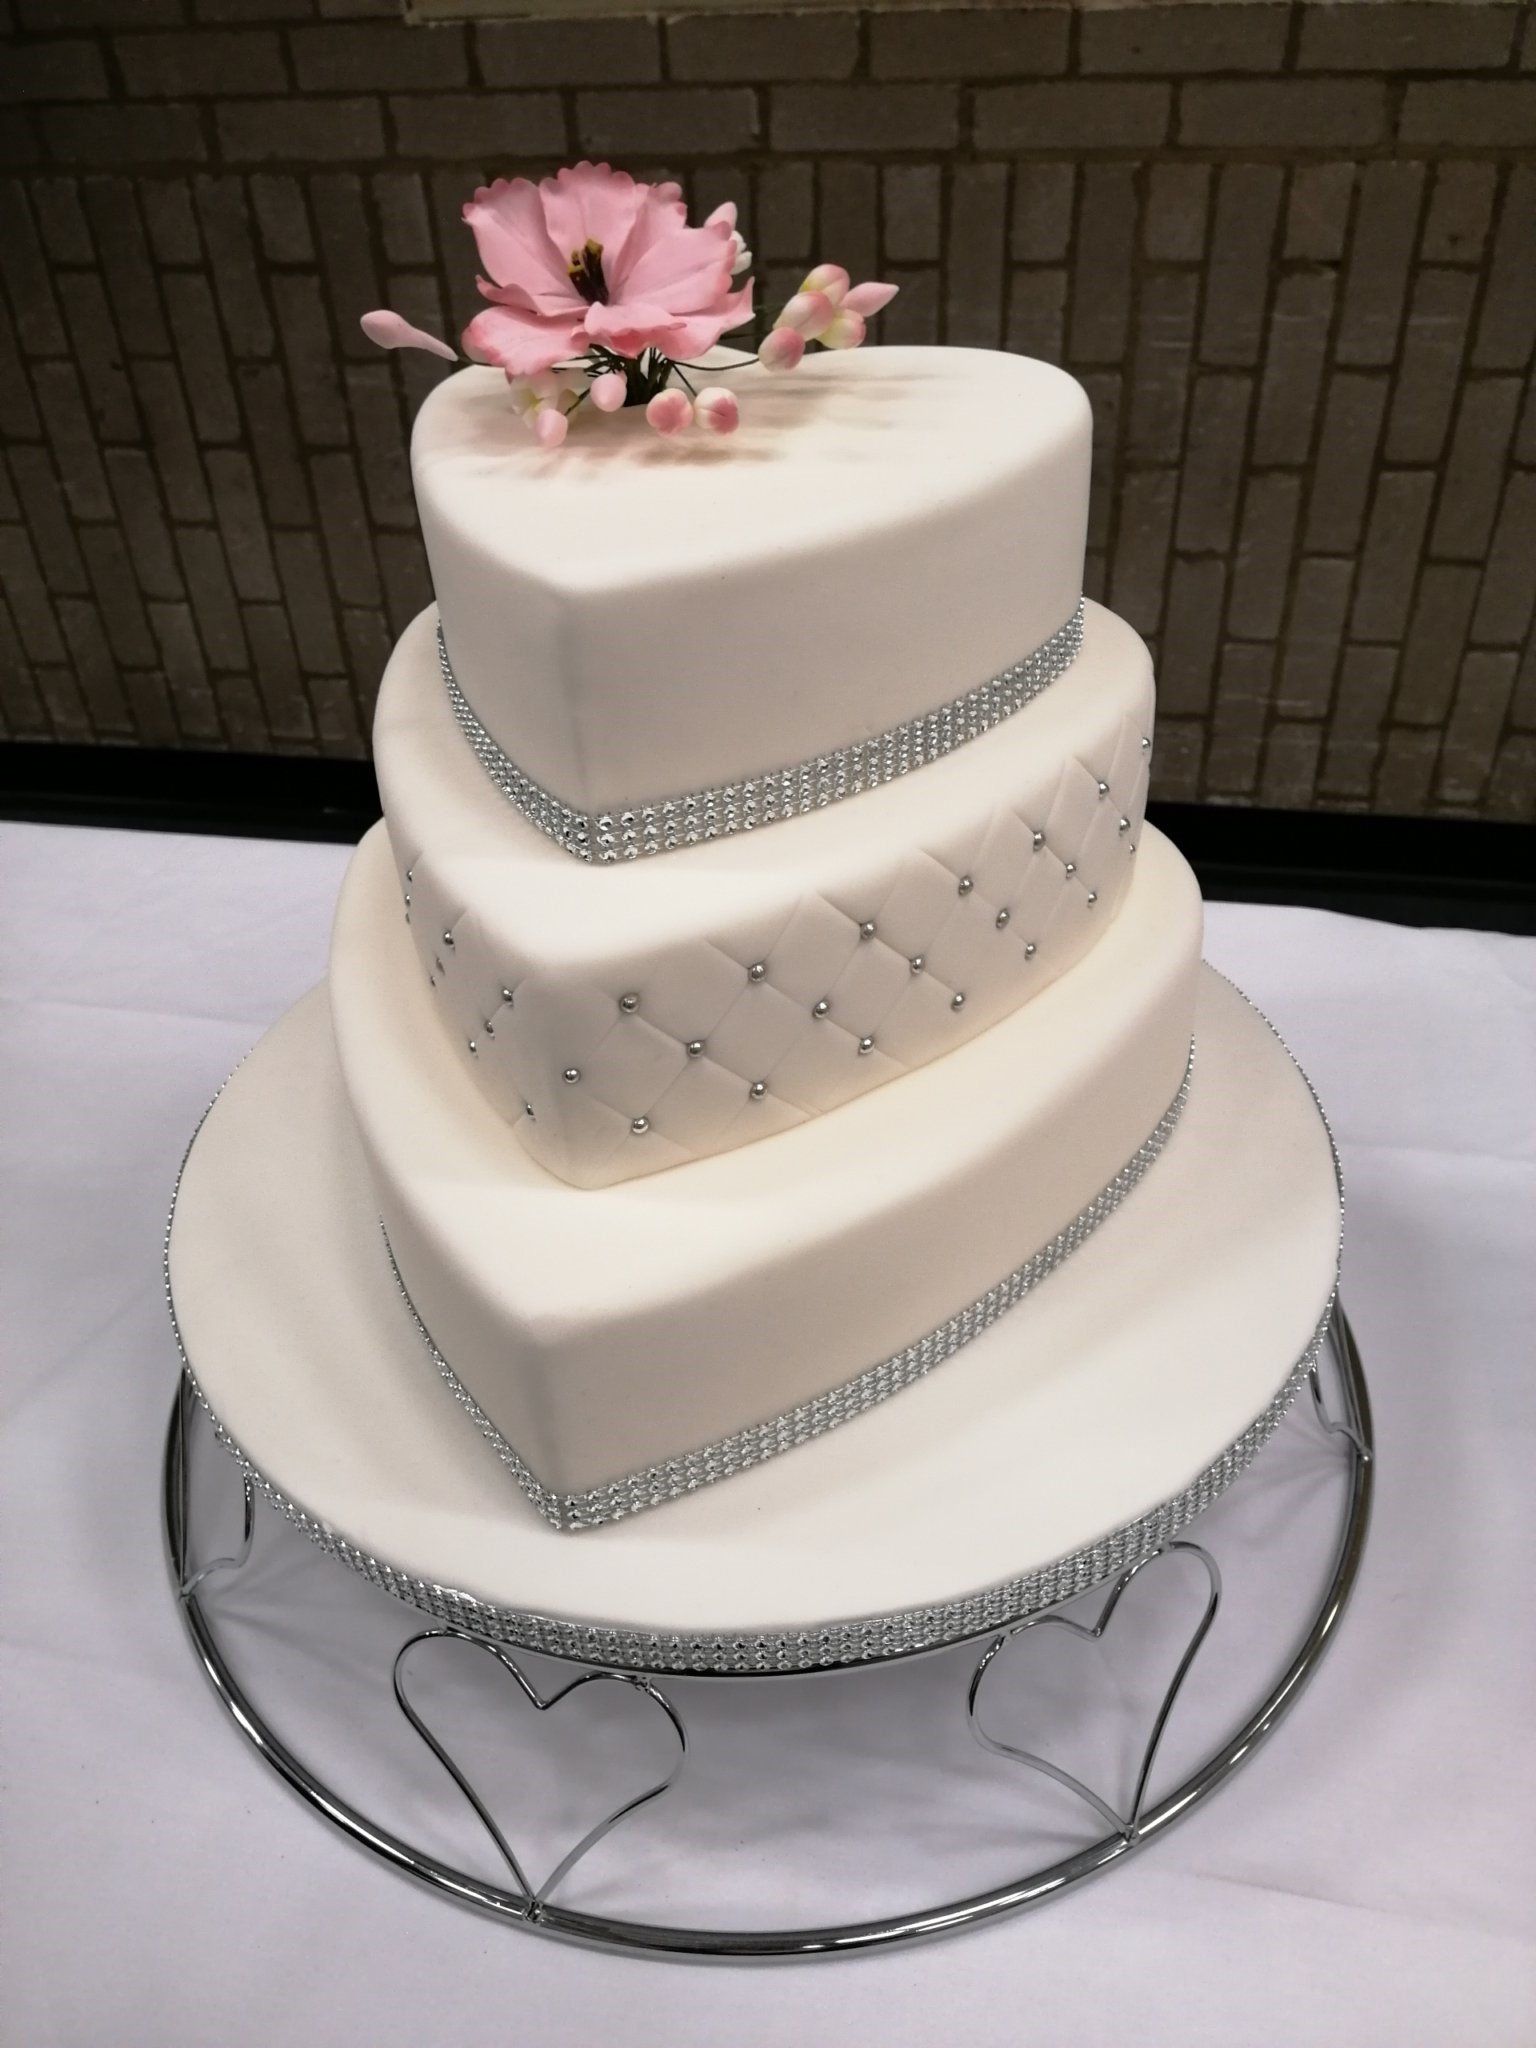 Willow Cakes Ashford 3-tier white heart wedding cake